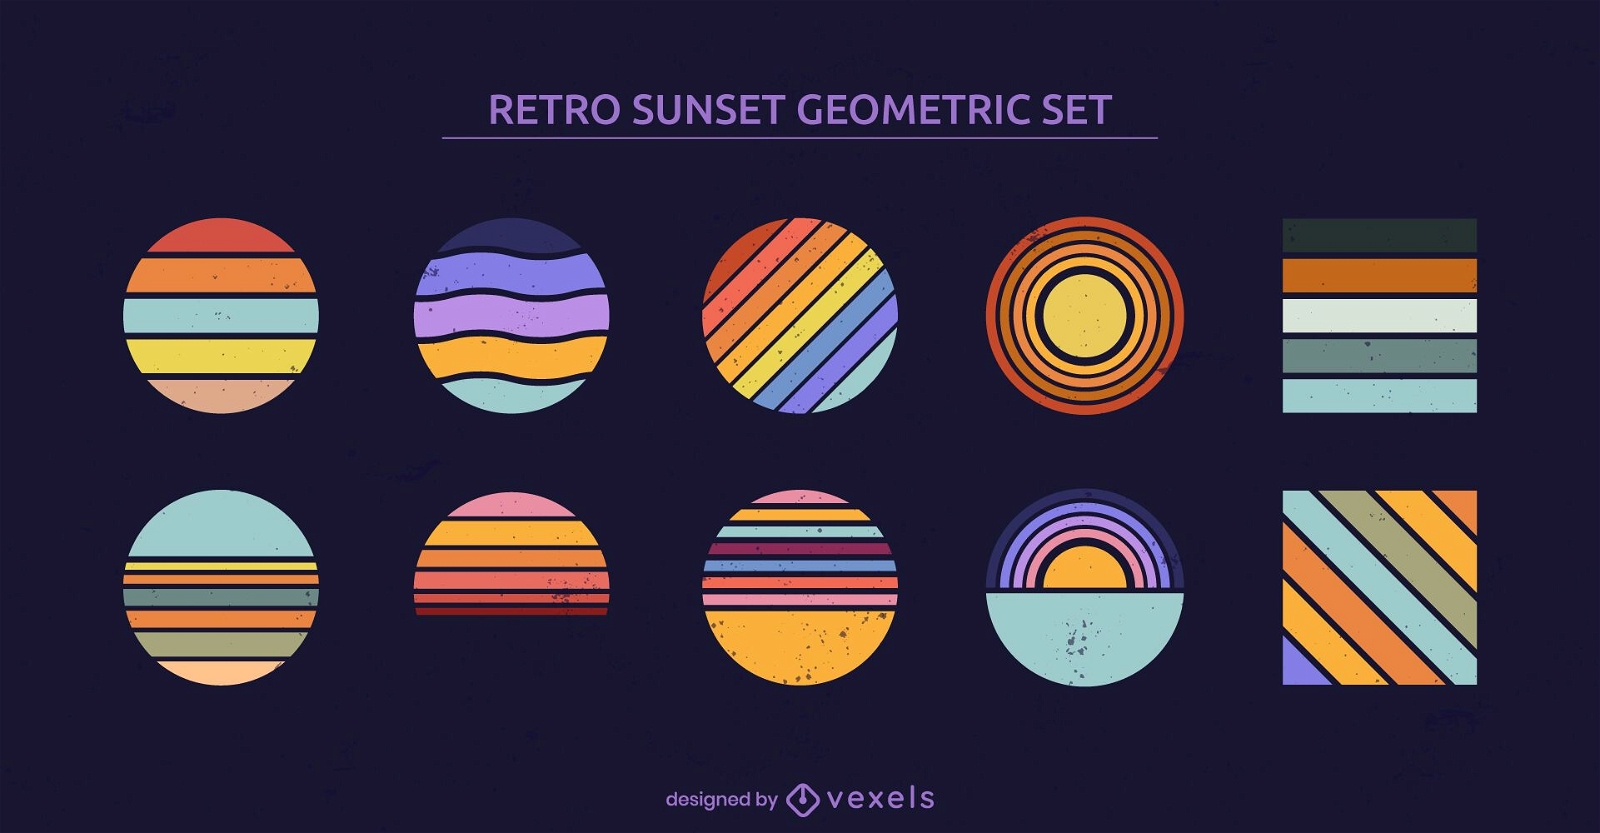 Sunset geometric shapes retro set